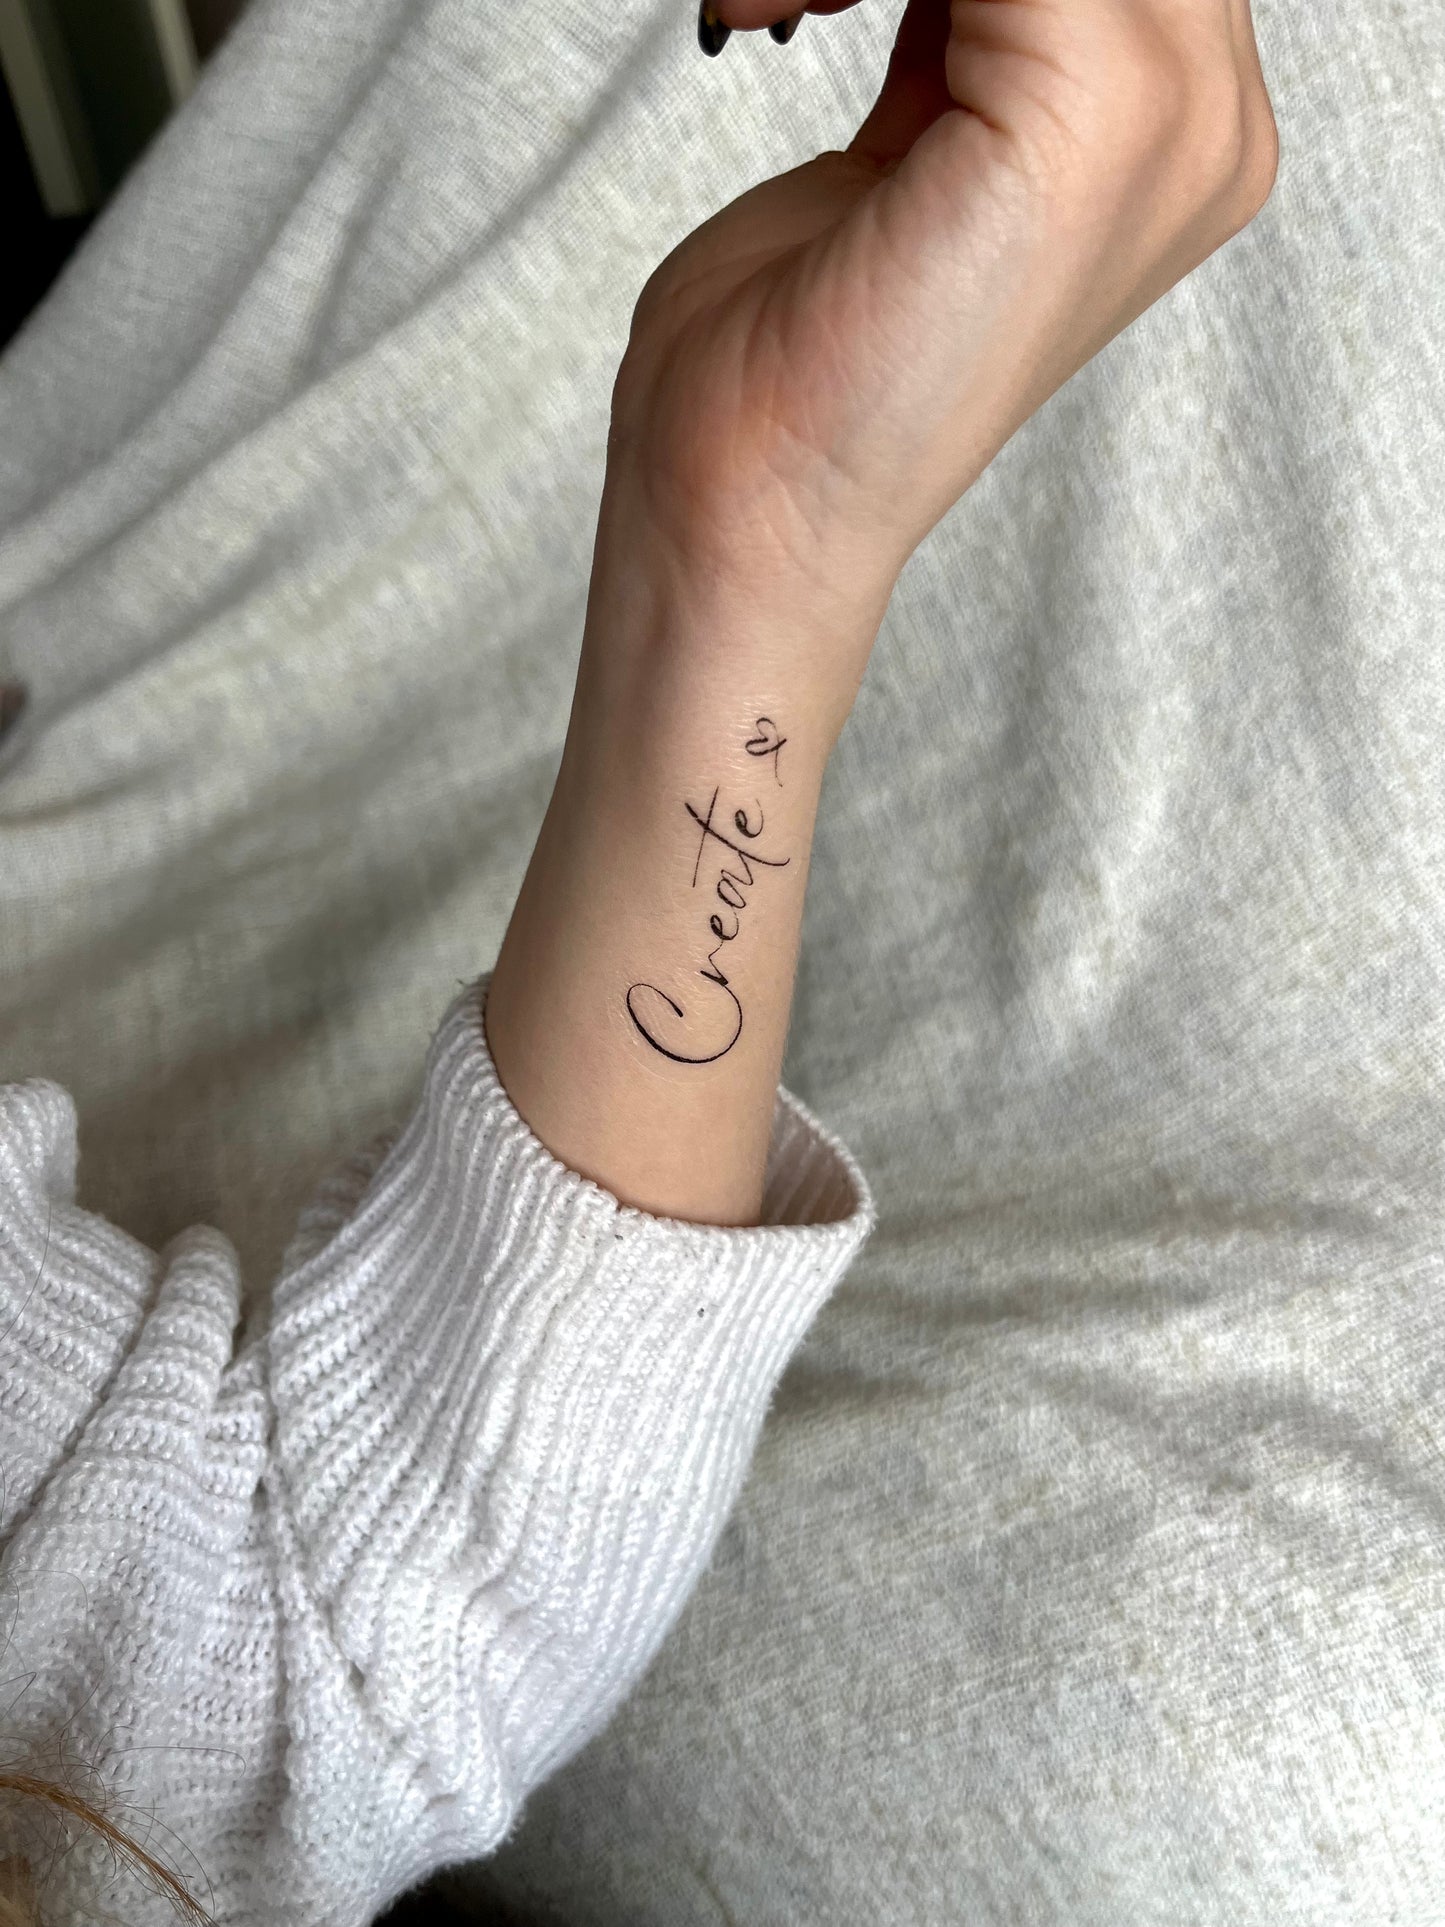 Temporary tattoo | Image or photo